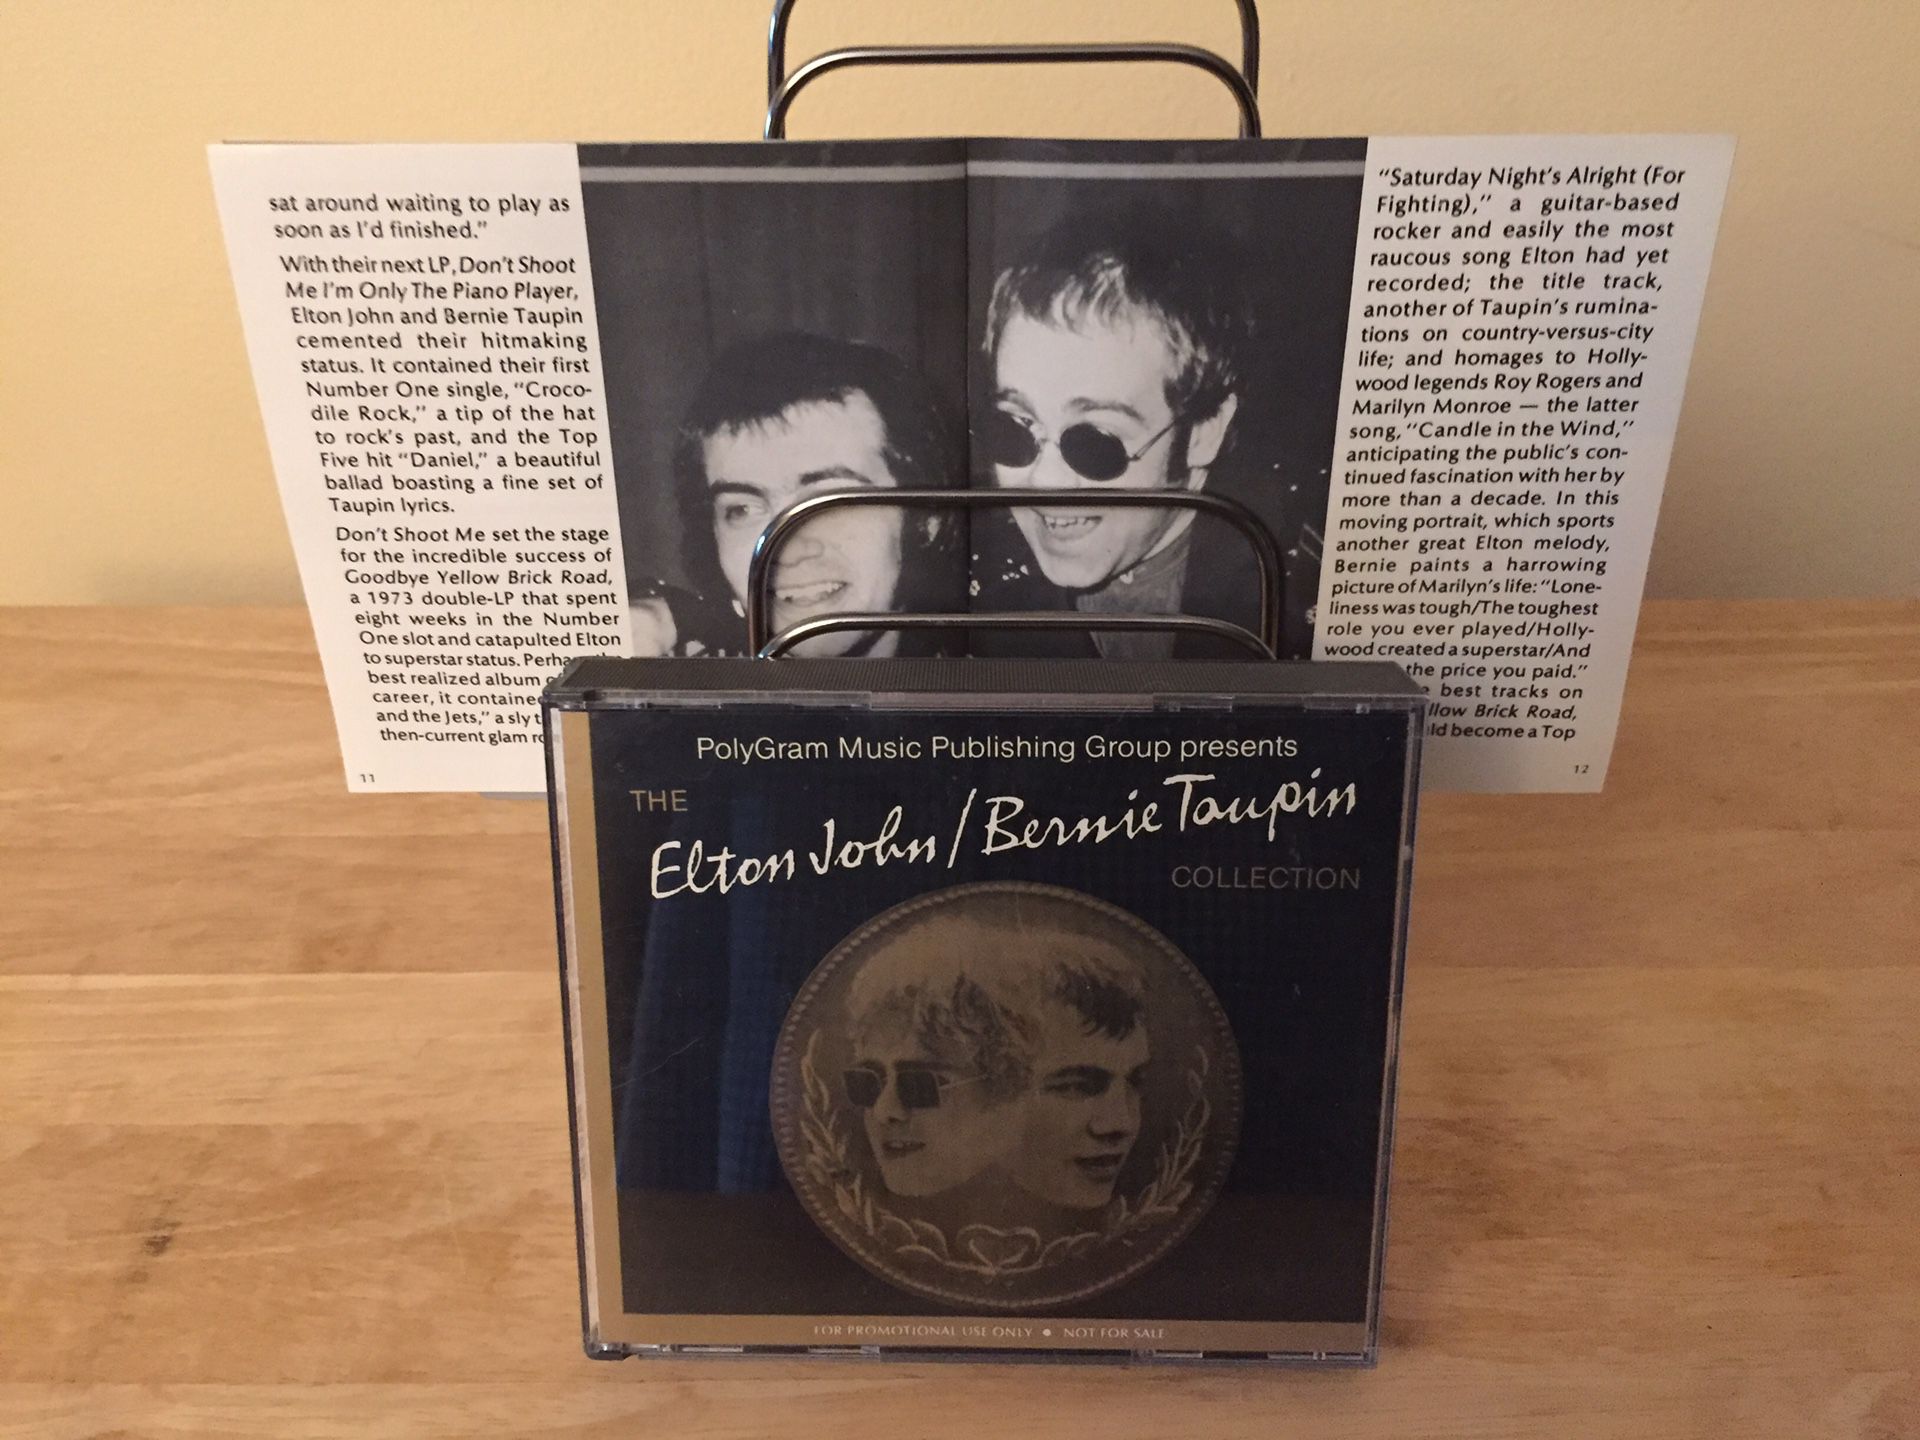 ➡️The Elton John / Bernie Toupin CD Collection